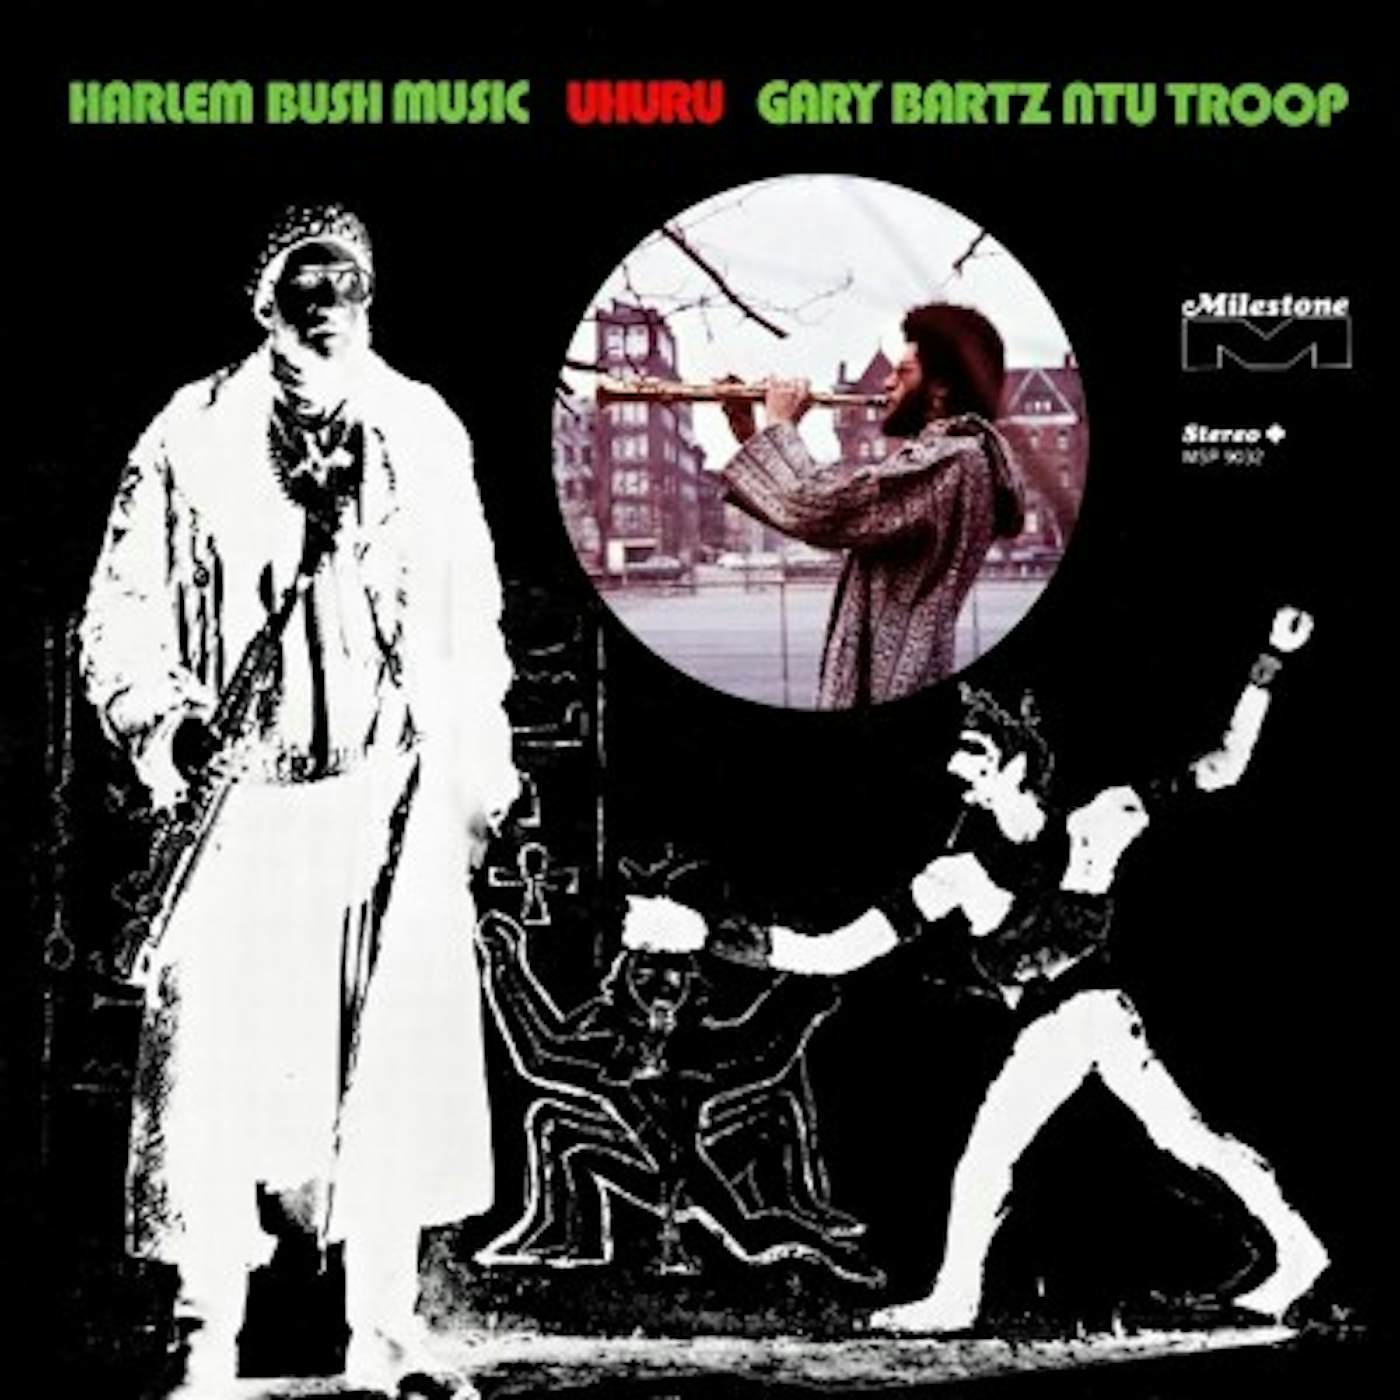 Gary Bartz Ntu Troop Harlem Bush Music - Uhuru Vinyl Record